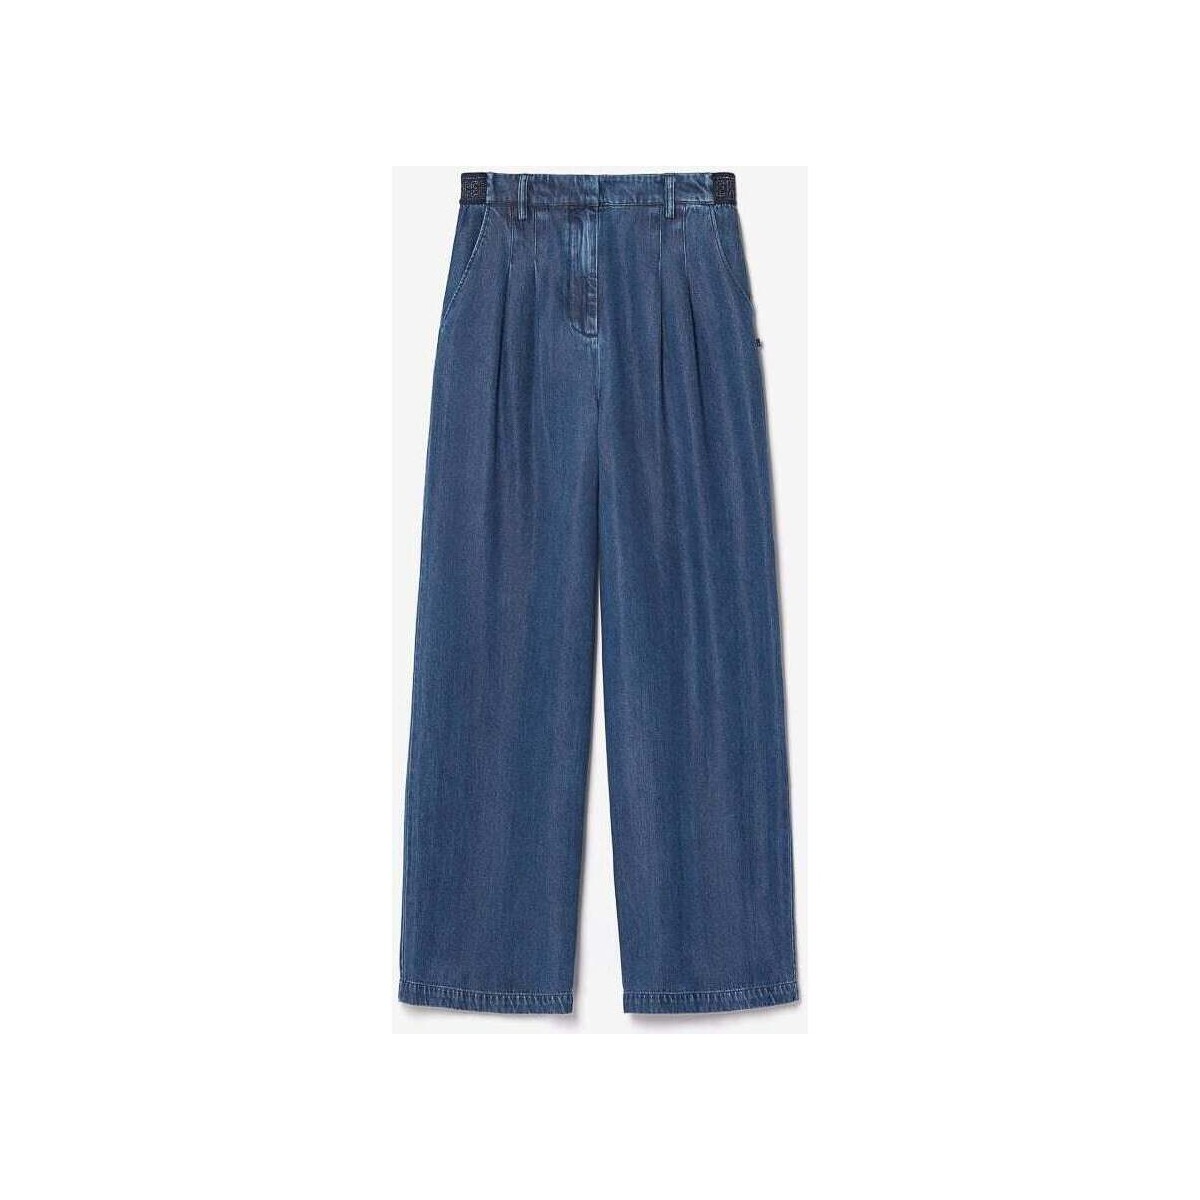 Abbigliamento Donna Pantaloni Le Temps des Cerises Pantaloni dritto JANE Blu